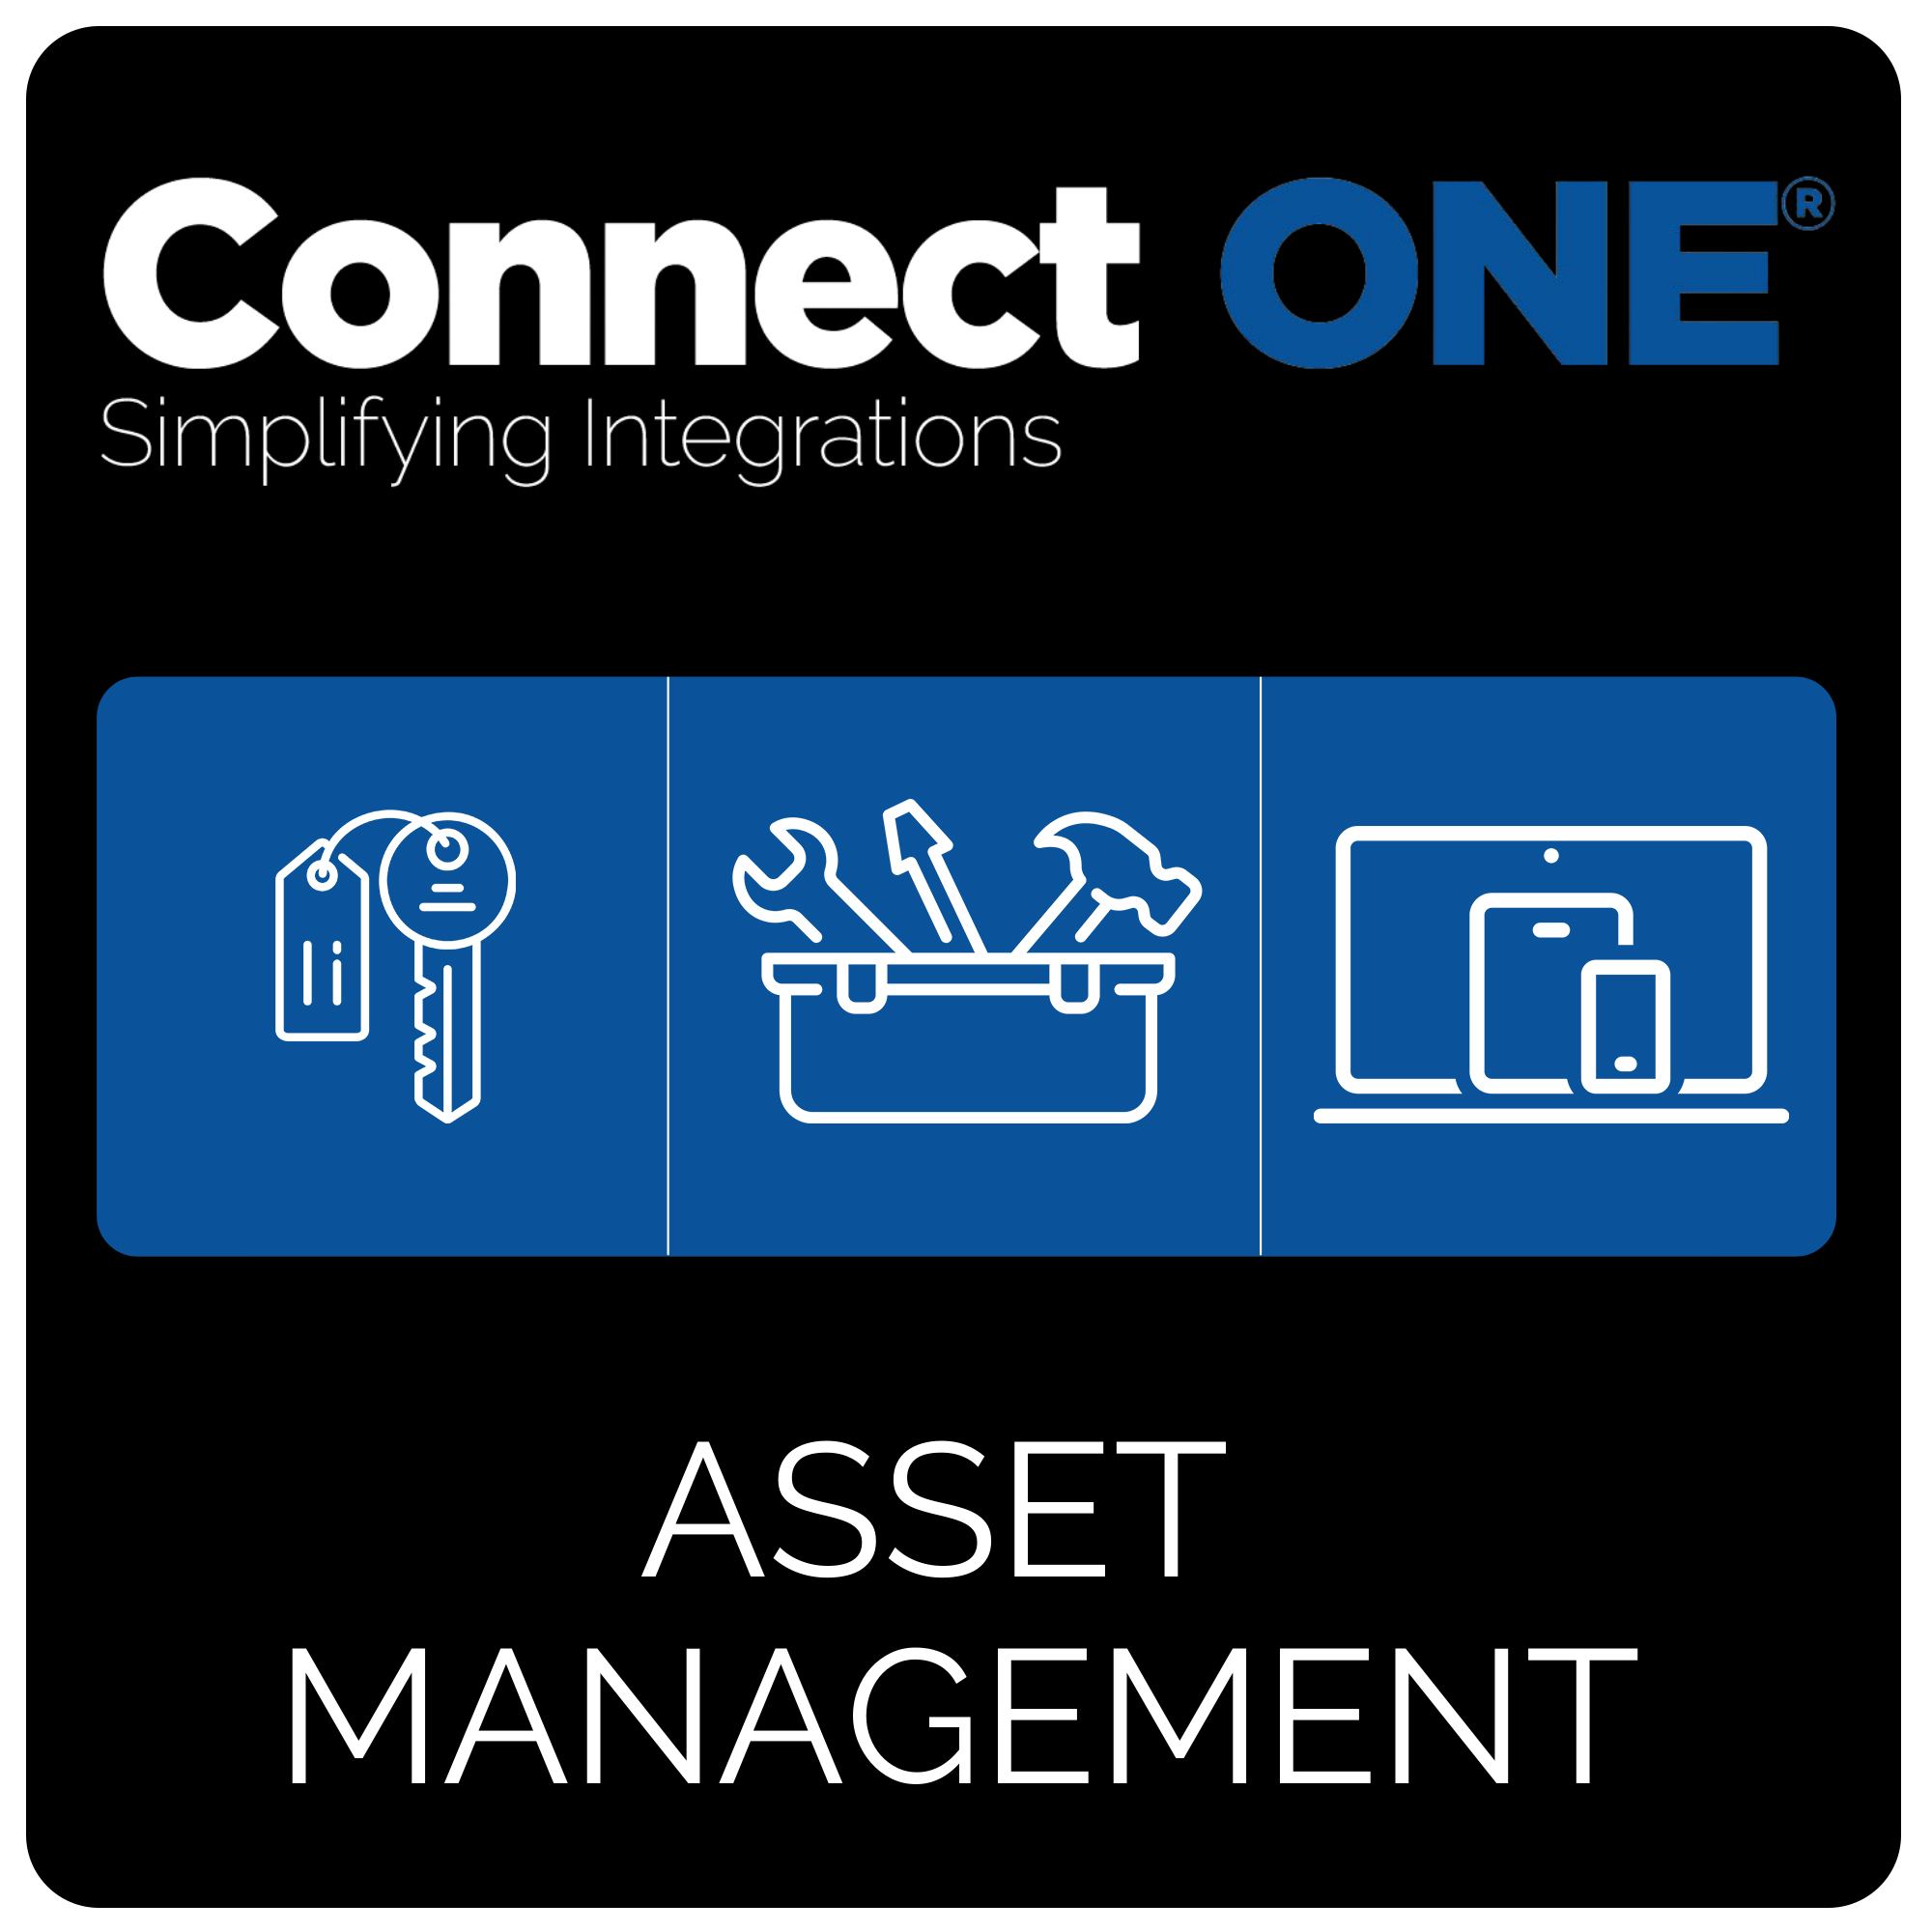 Connect ONE Asset Management